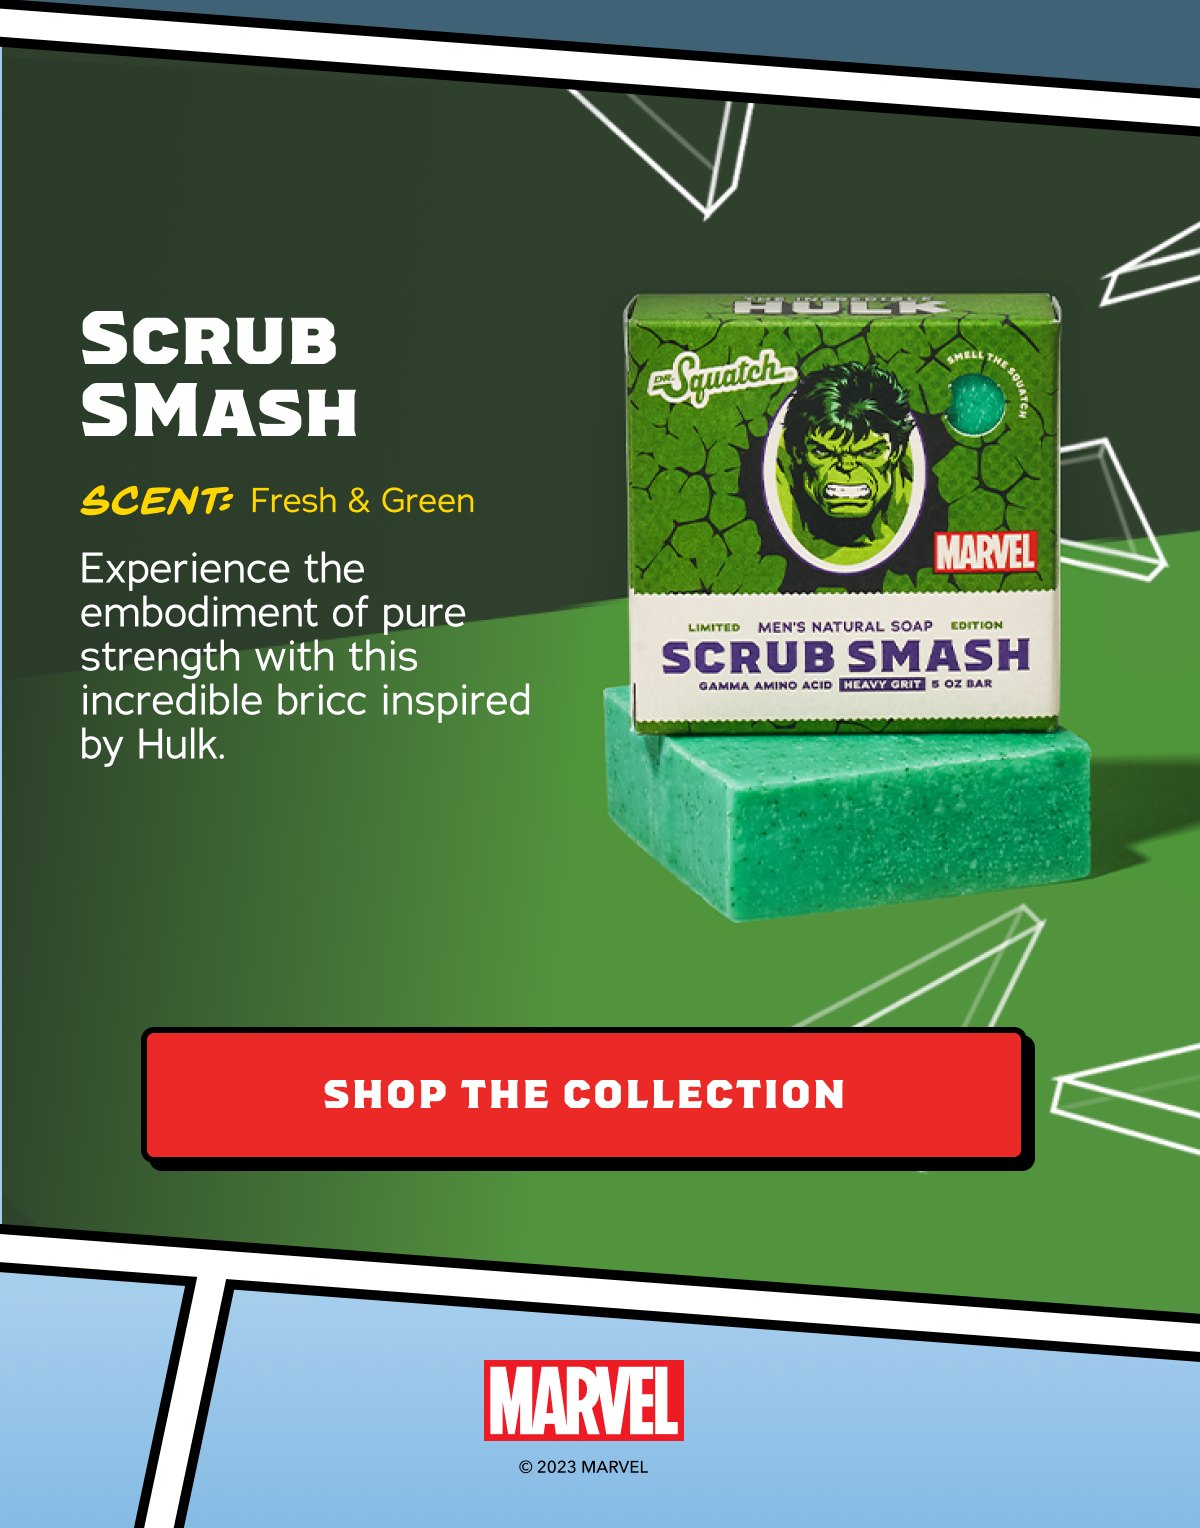 Dr. Squatch Soap Avengers Collection Box